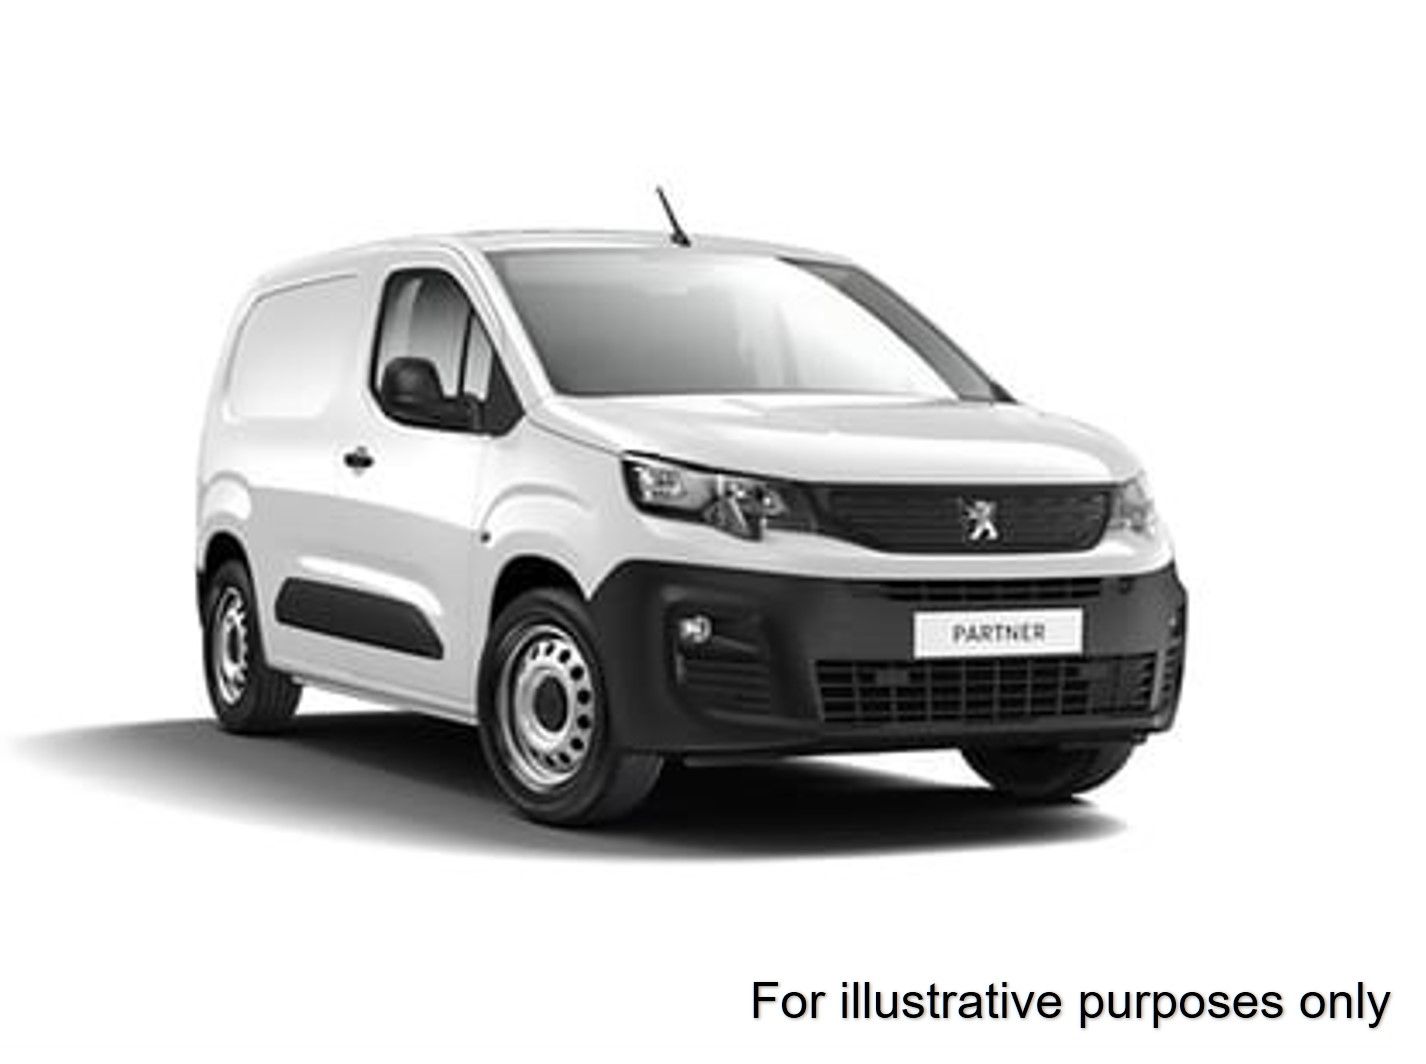 2019 Peugeot Partner 1000 1.5 Bluehdi 100 Professional Van (NU19FEP) Thumbnail 1